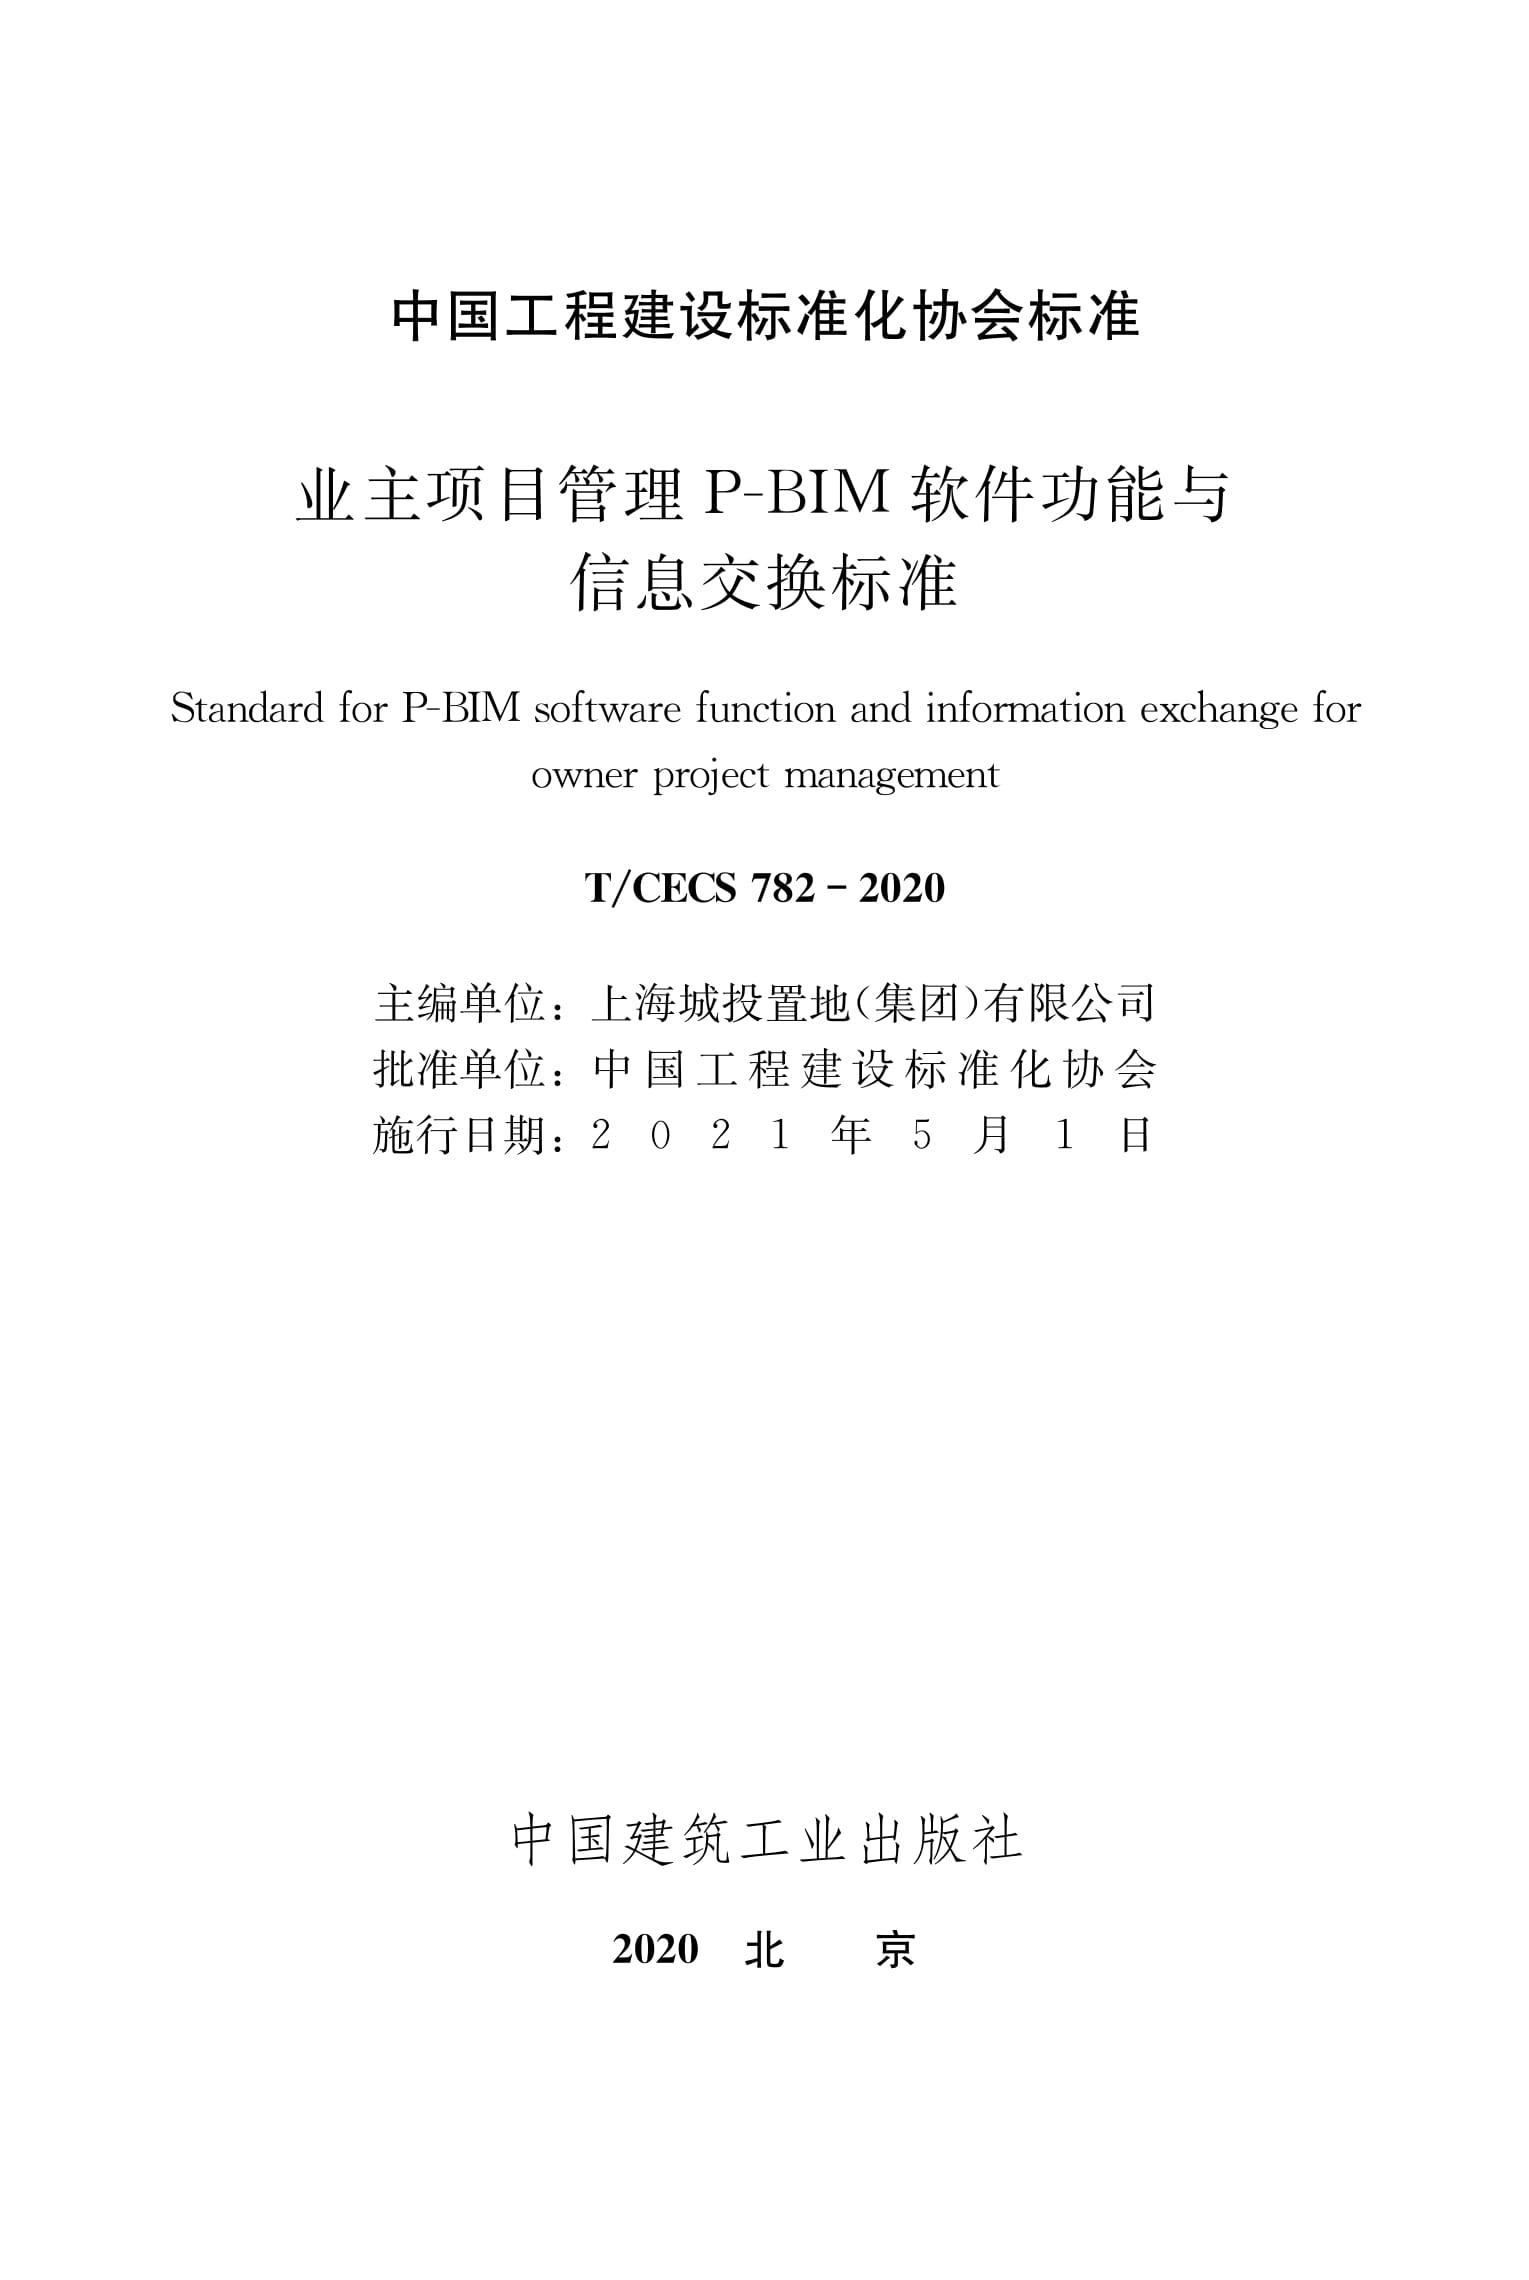 T/CECS 782-2020 业主项目管理P-BIM软件功能与信息交换标准